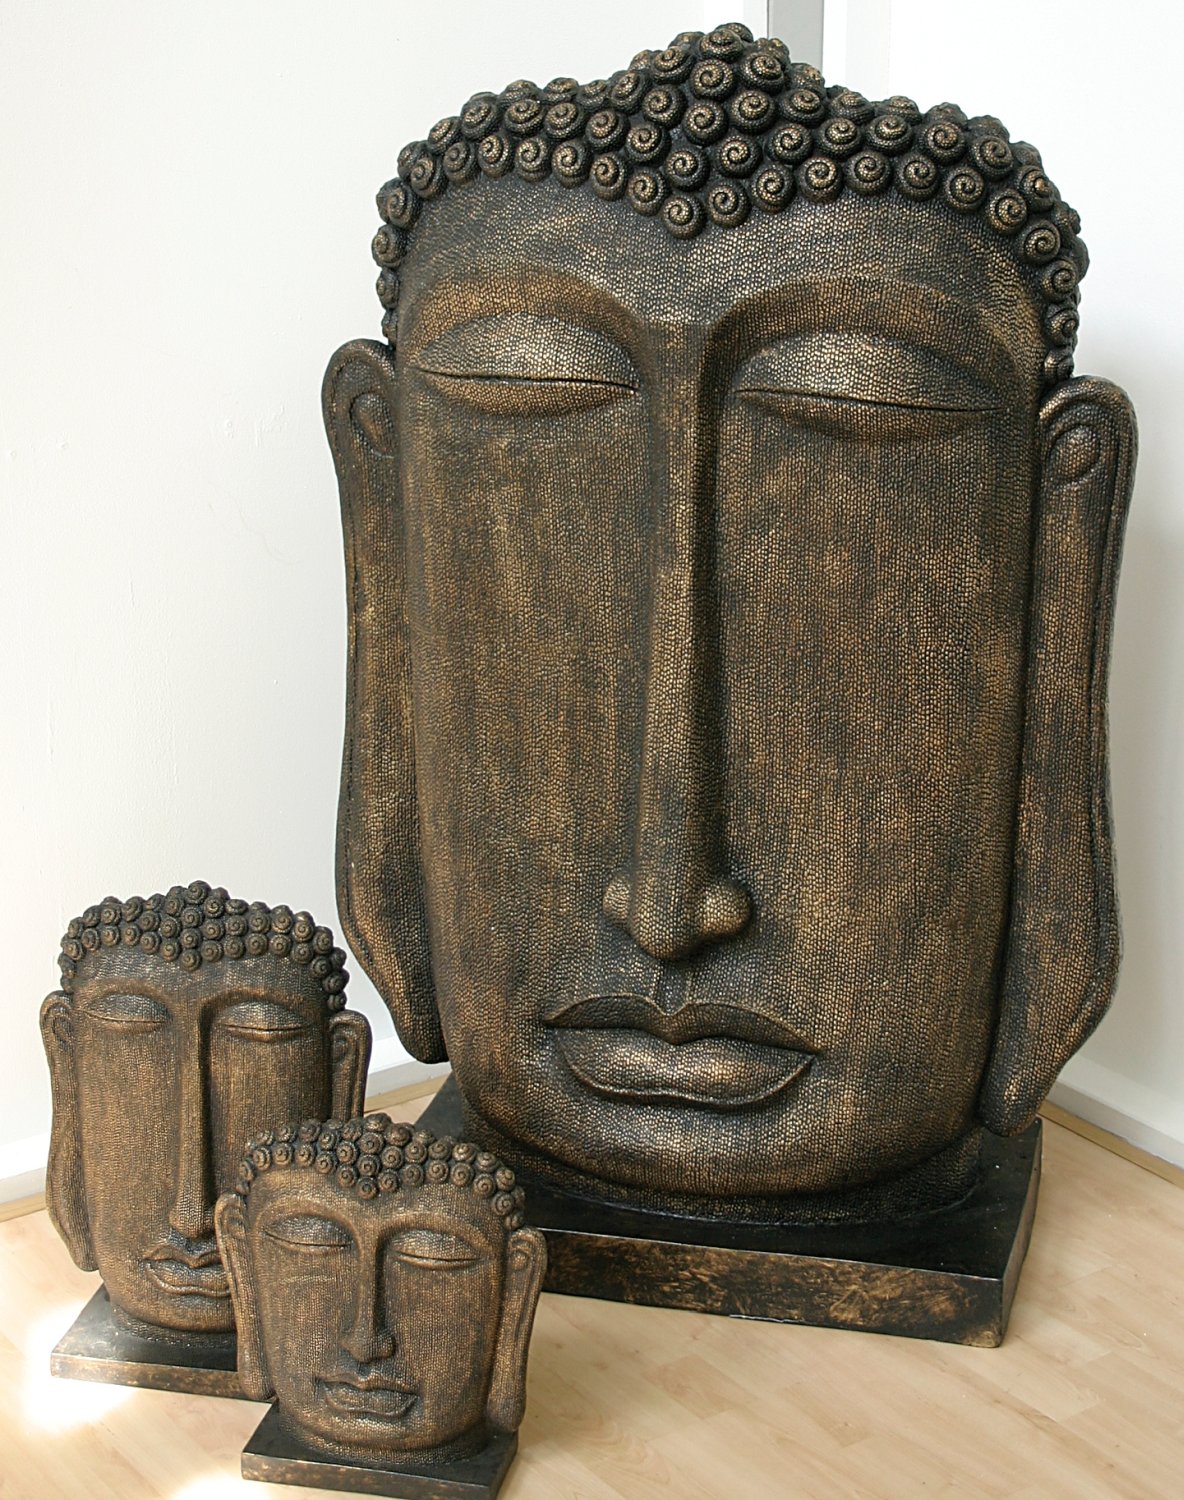 Deko Buddhakopf aus Fiberglas, 120 x 79 x 37 cm, braun